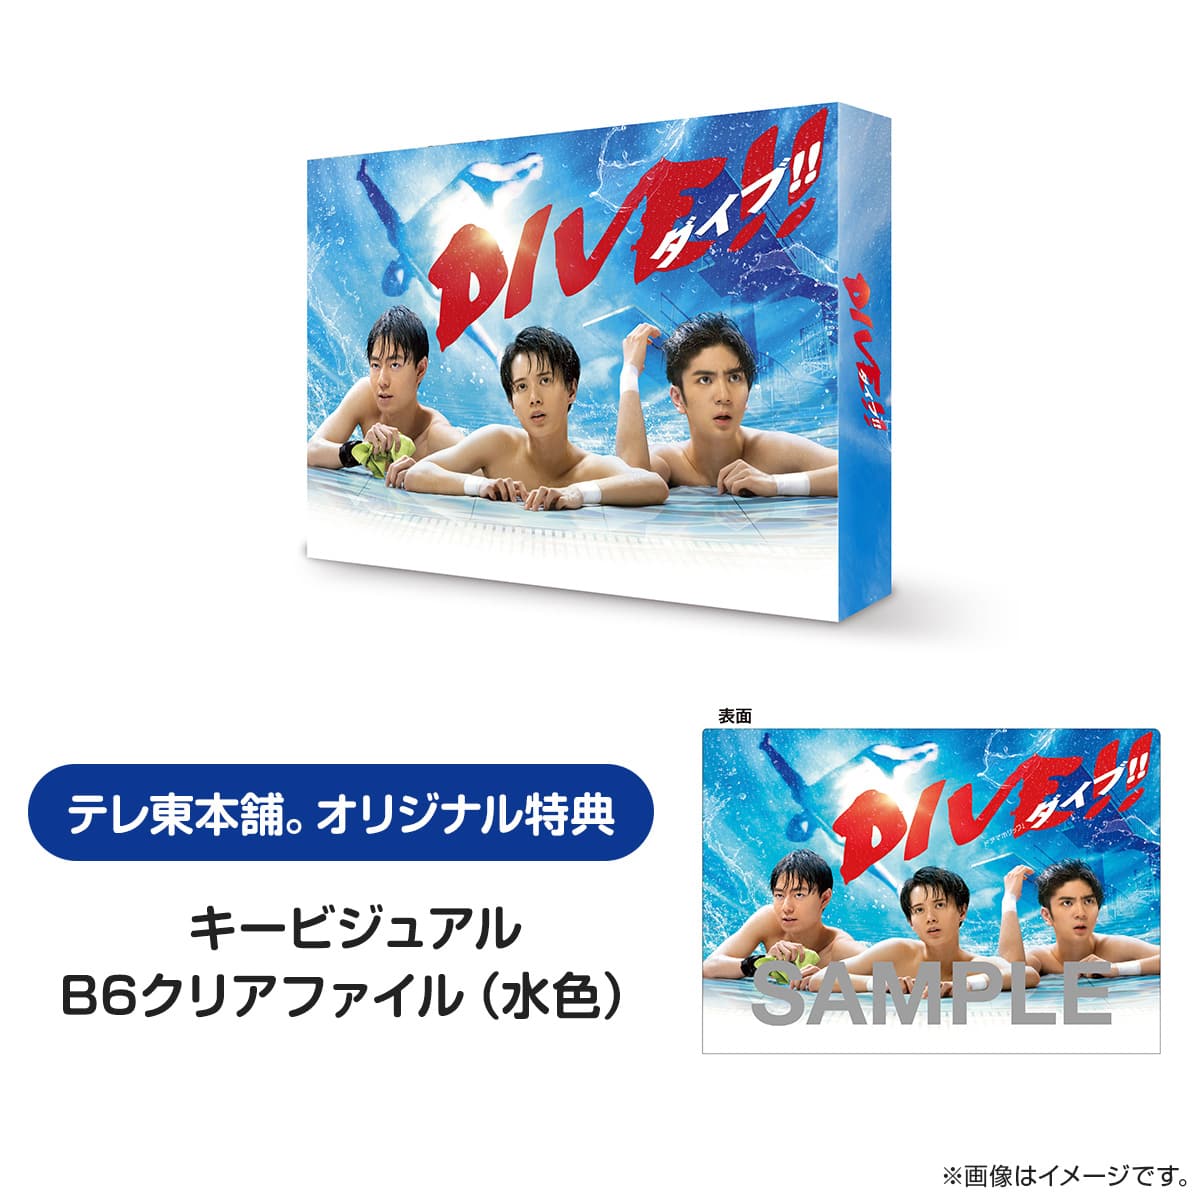 DIVE!! Blu-ray BOX ミニクリアファイル付き セール人気商品 